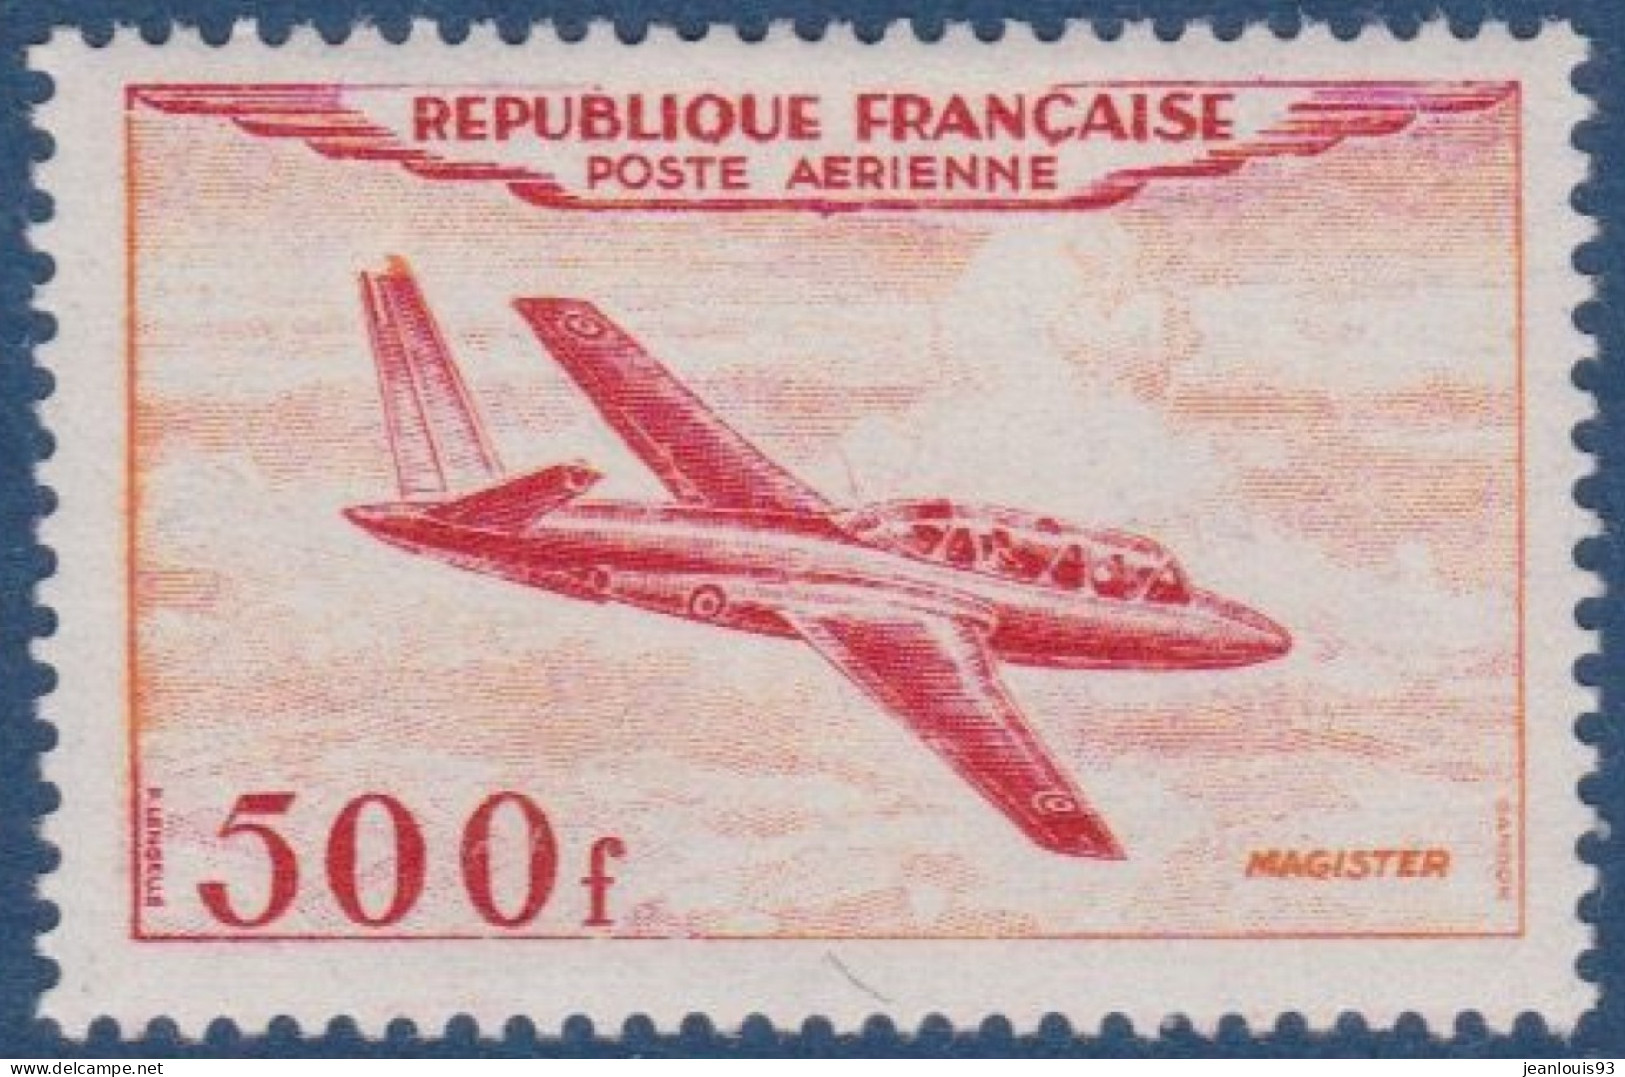 FRANCE - PA 32  FOUGA 500F NEUF AVEC CHARNIERE PROPRE COTE 110 EUR - 1927-1959 Ungebraucht